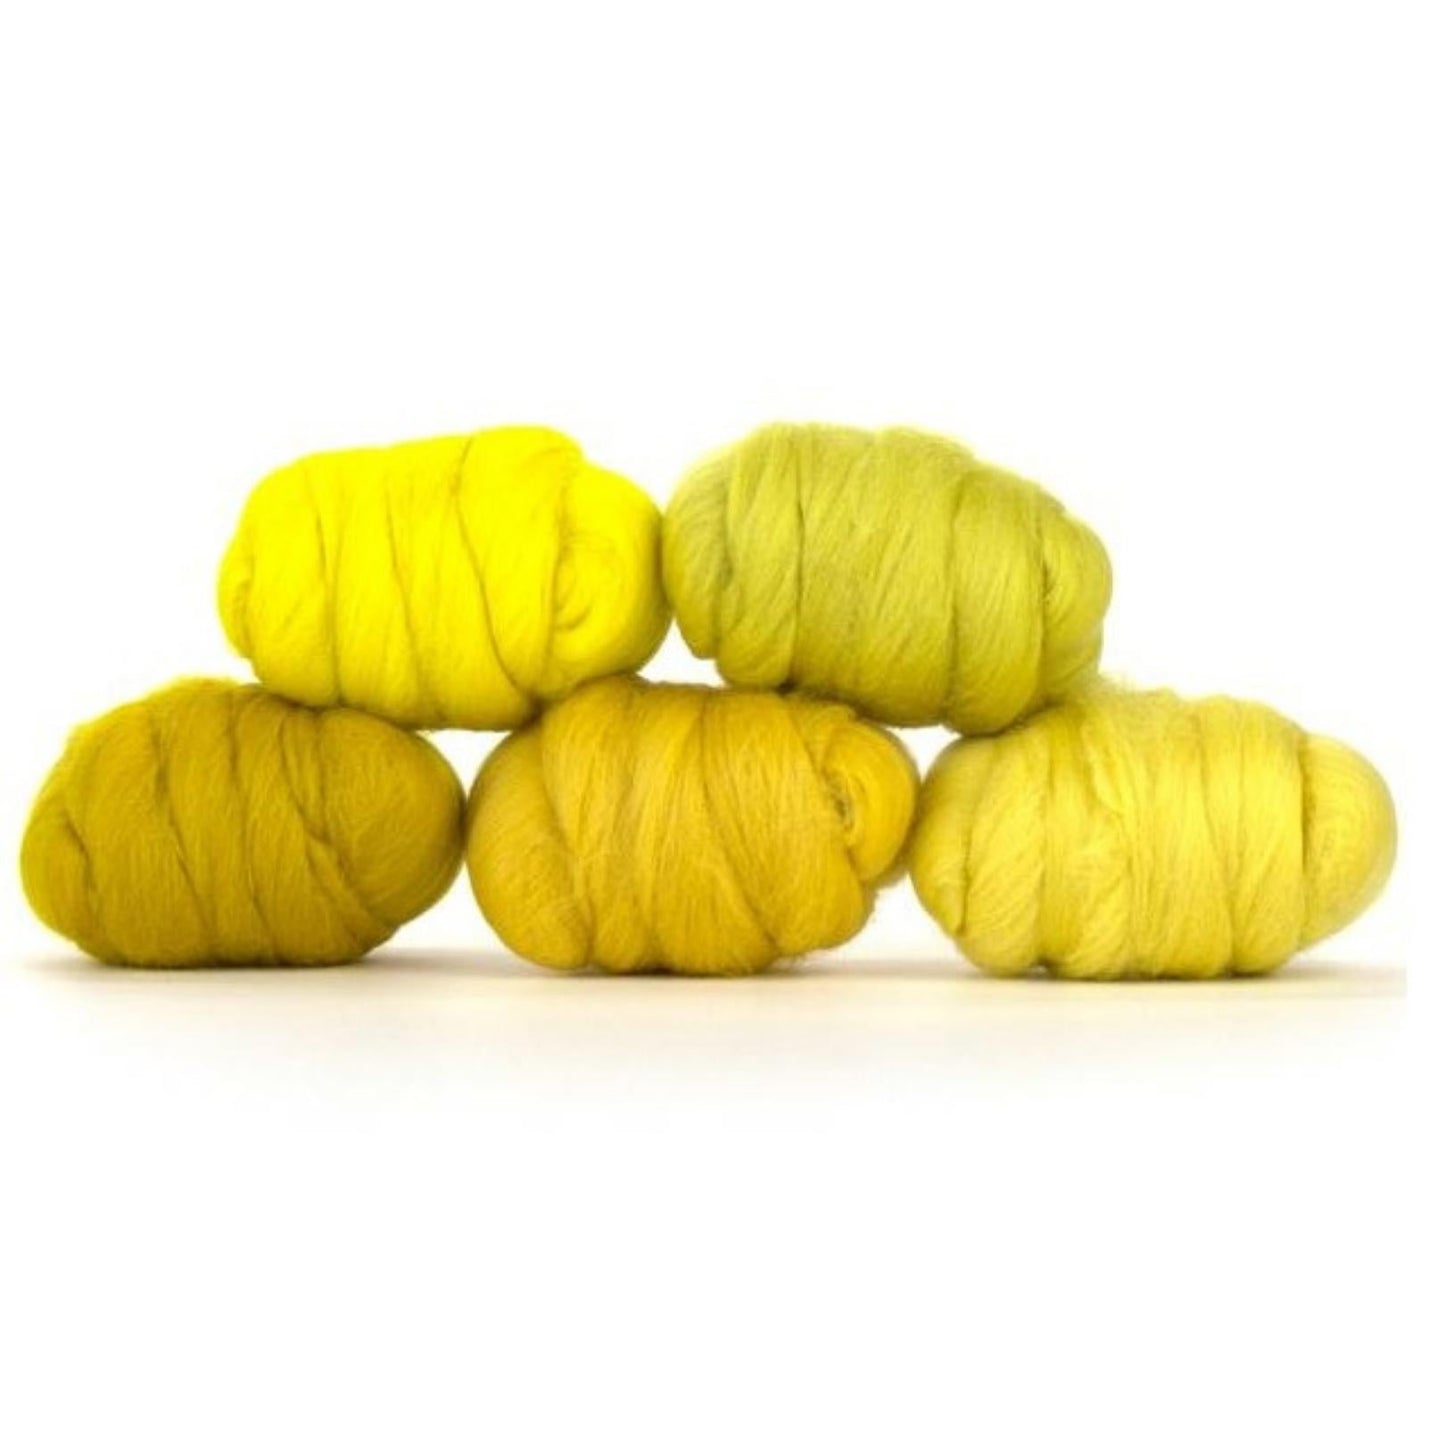 Mixed Merino Wool Variety Pack | Lemon Drop (Yellows) 250 Grams, 23 Micron